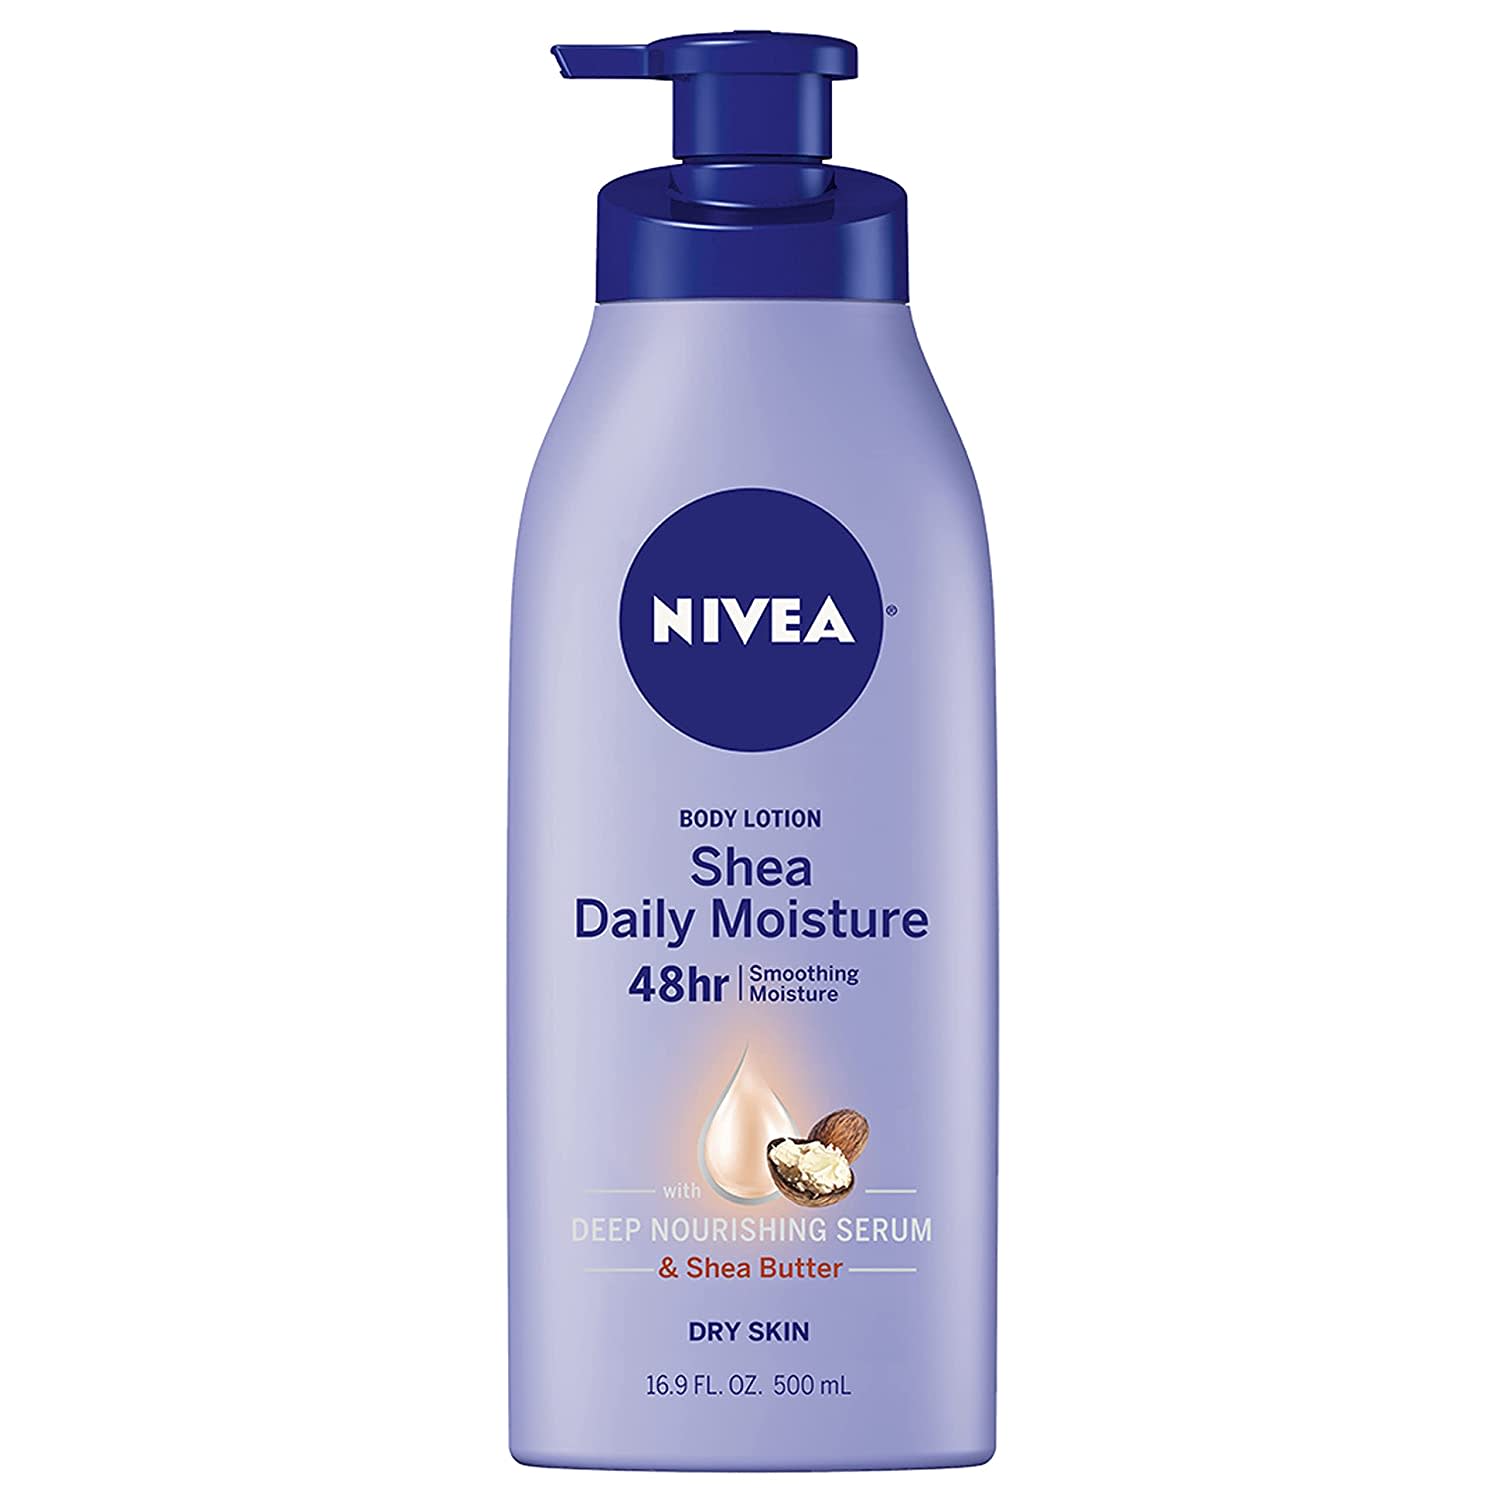 Discover Beiersdorf Inc.'s Nivea shea body lotion on Amazon.